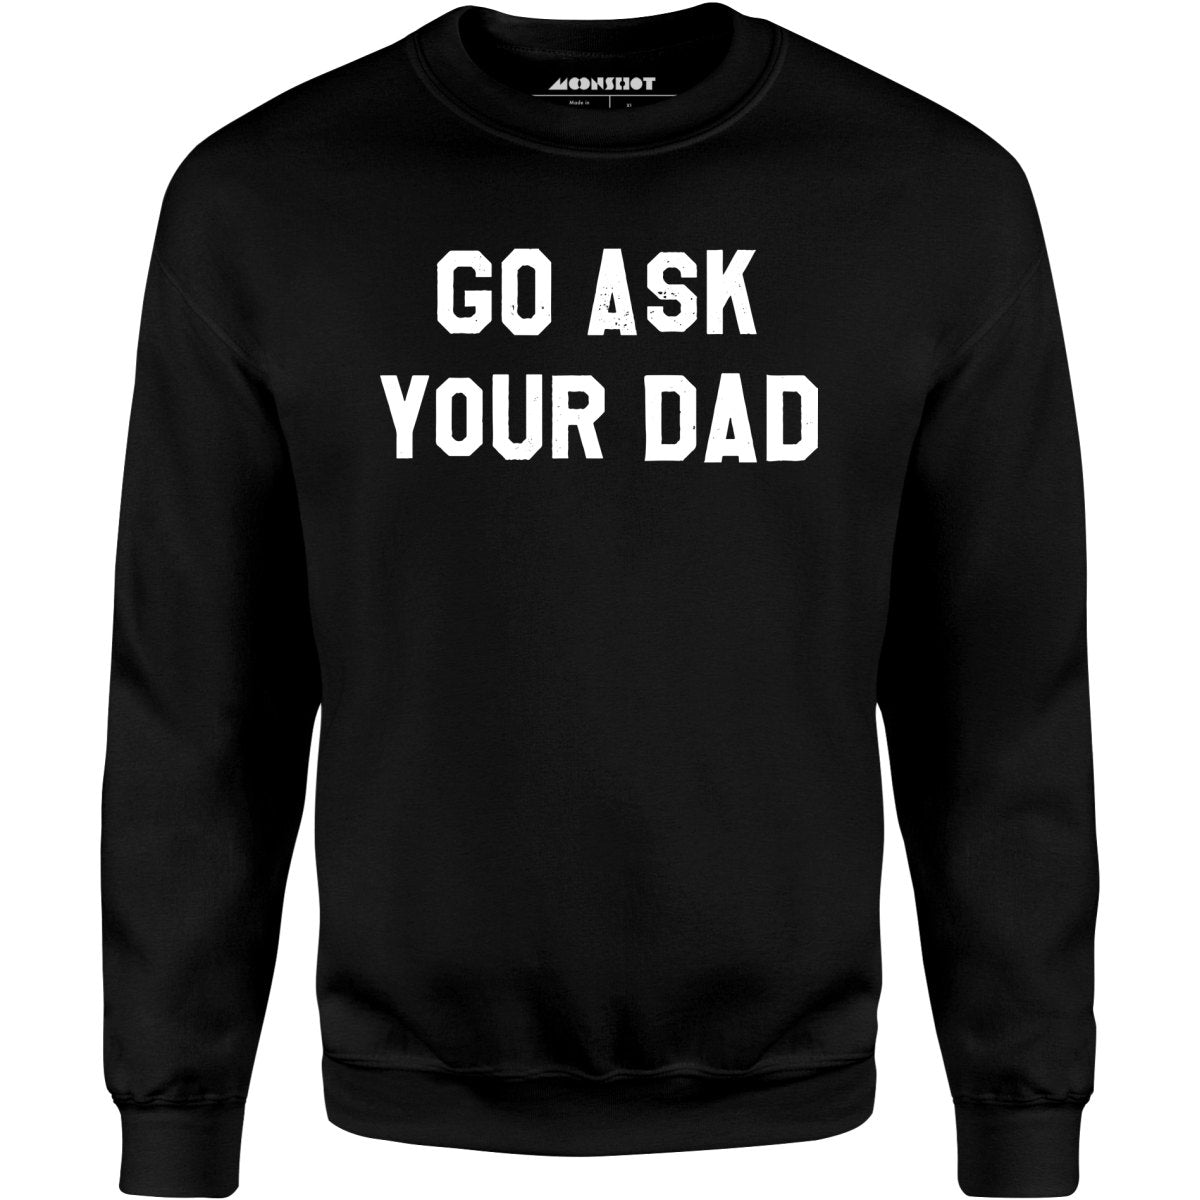 Go Ask Your Dad - Unisex Sweatshirt